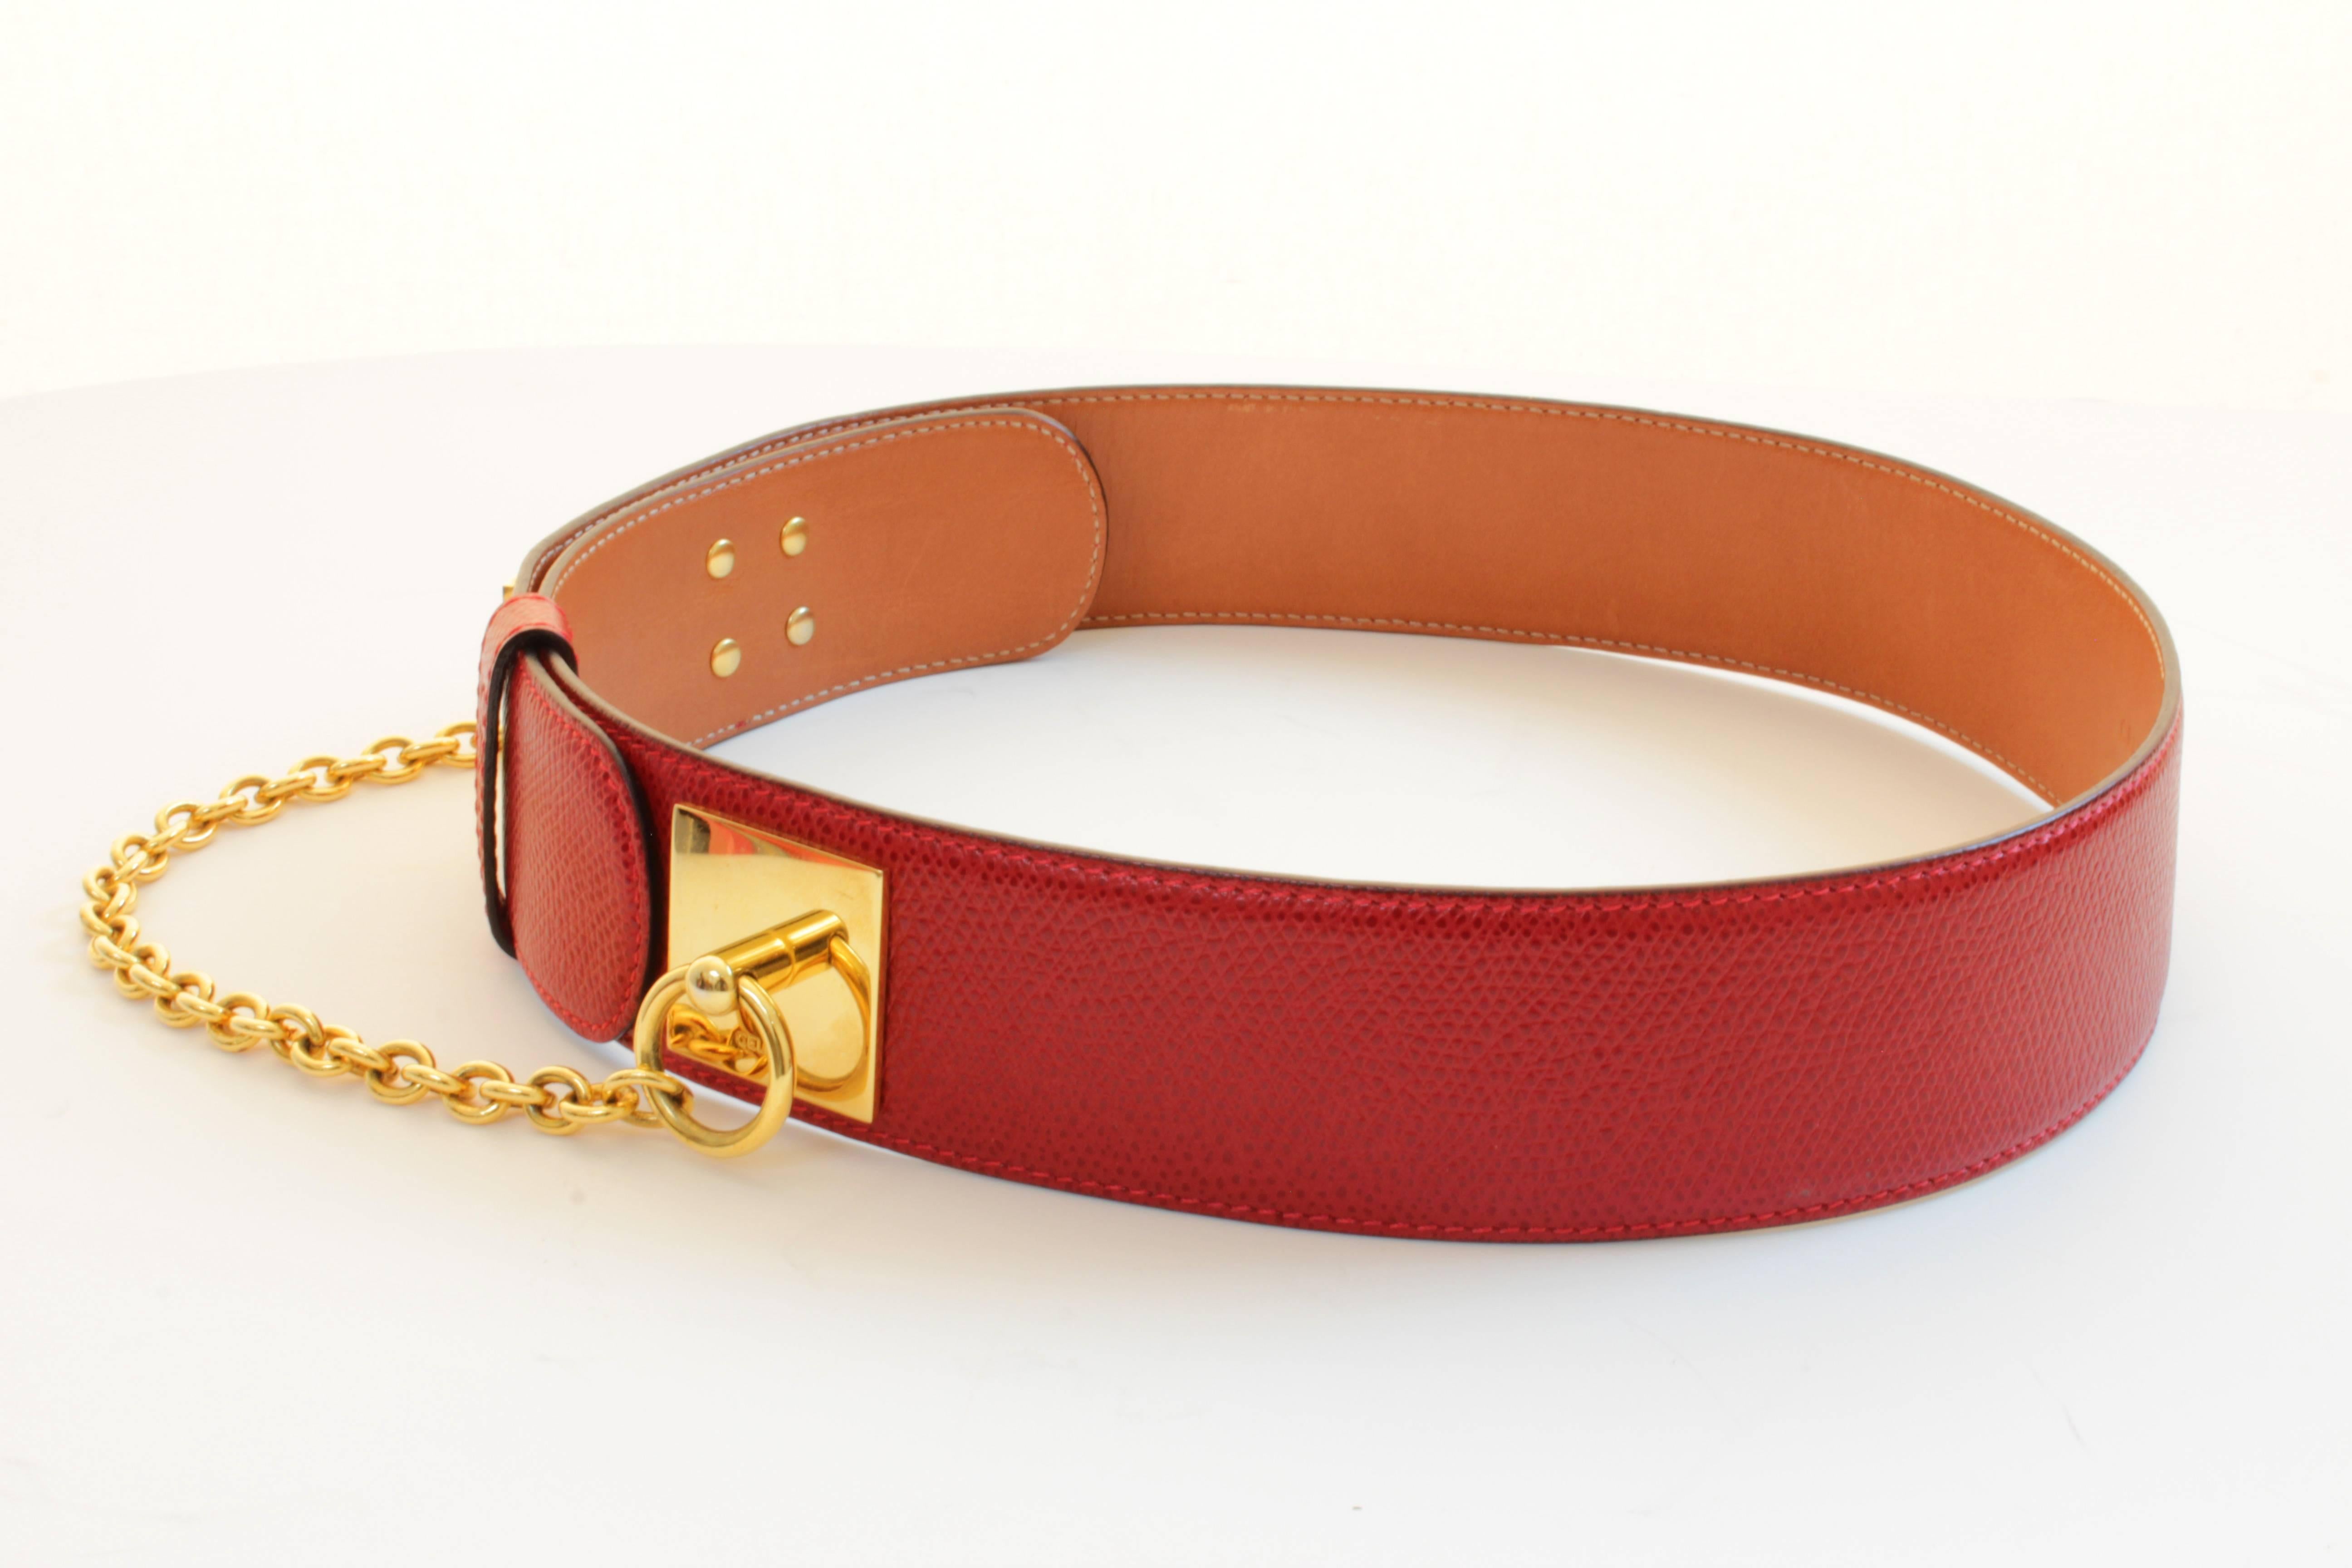 Women's Celine Paris Red Leather Belt with Gold Chain Detail Size 65cm